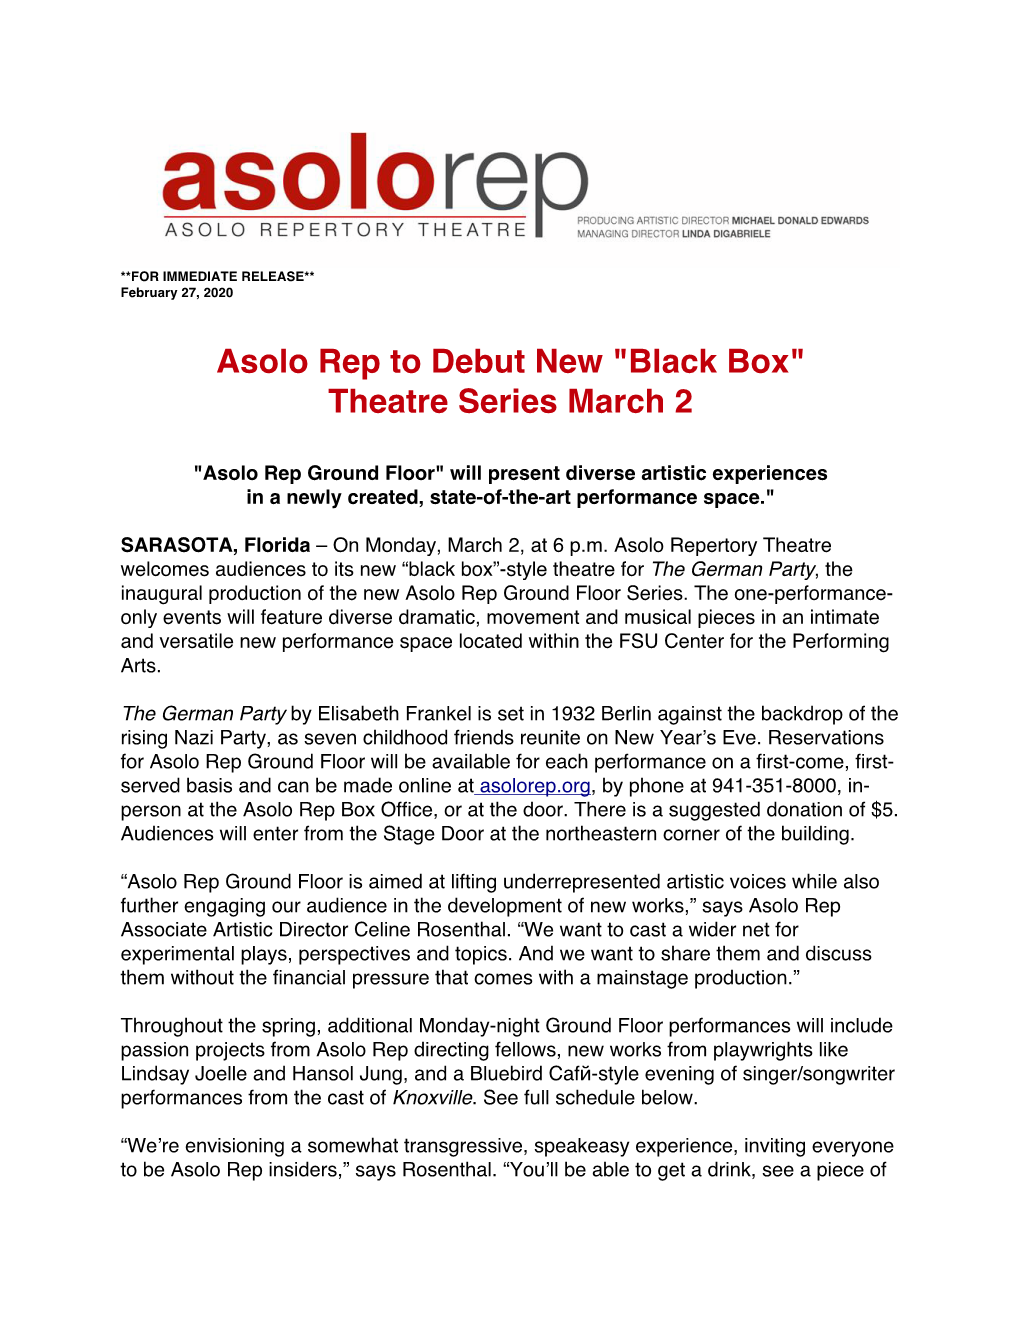 Asolo Rep to Debut New "Black Box" Theatre Series March 2